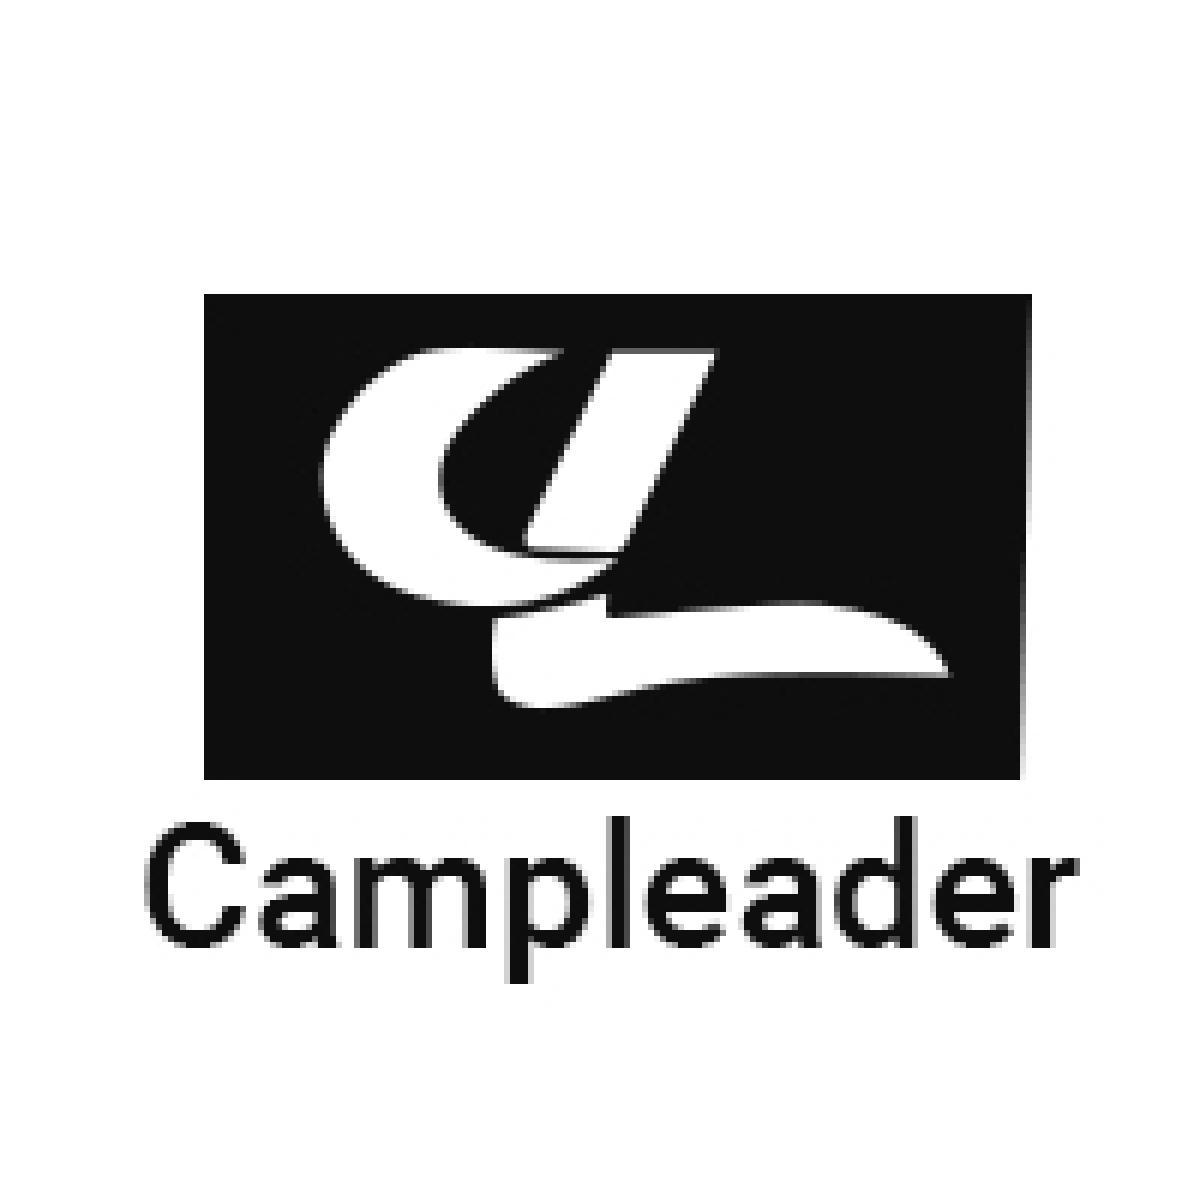 Campleader